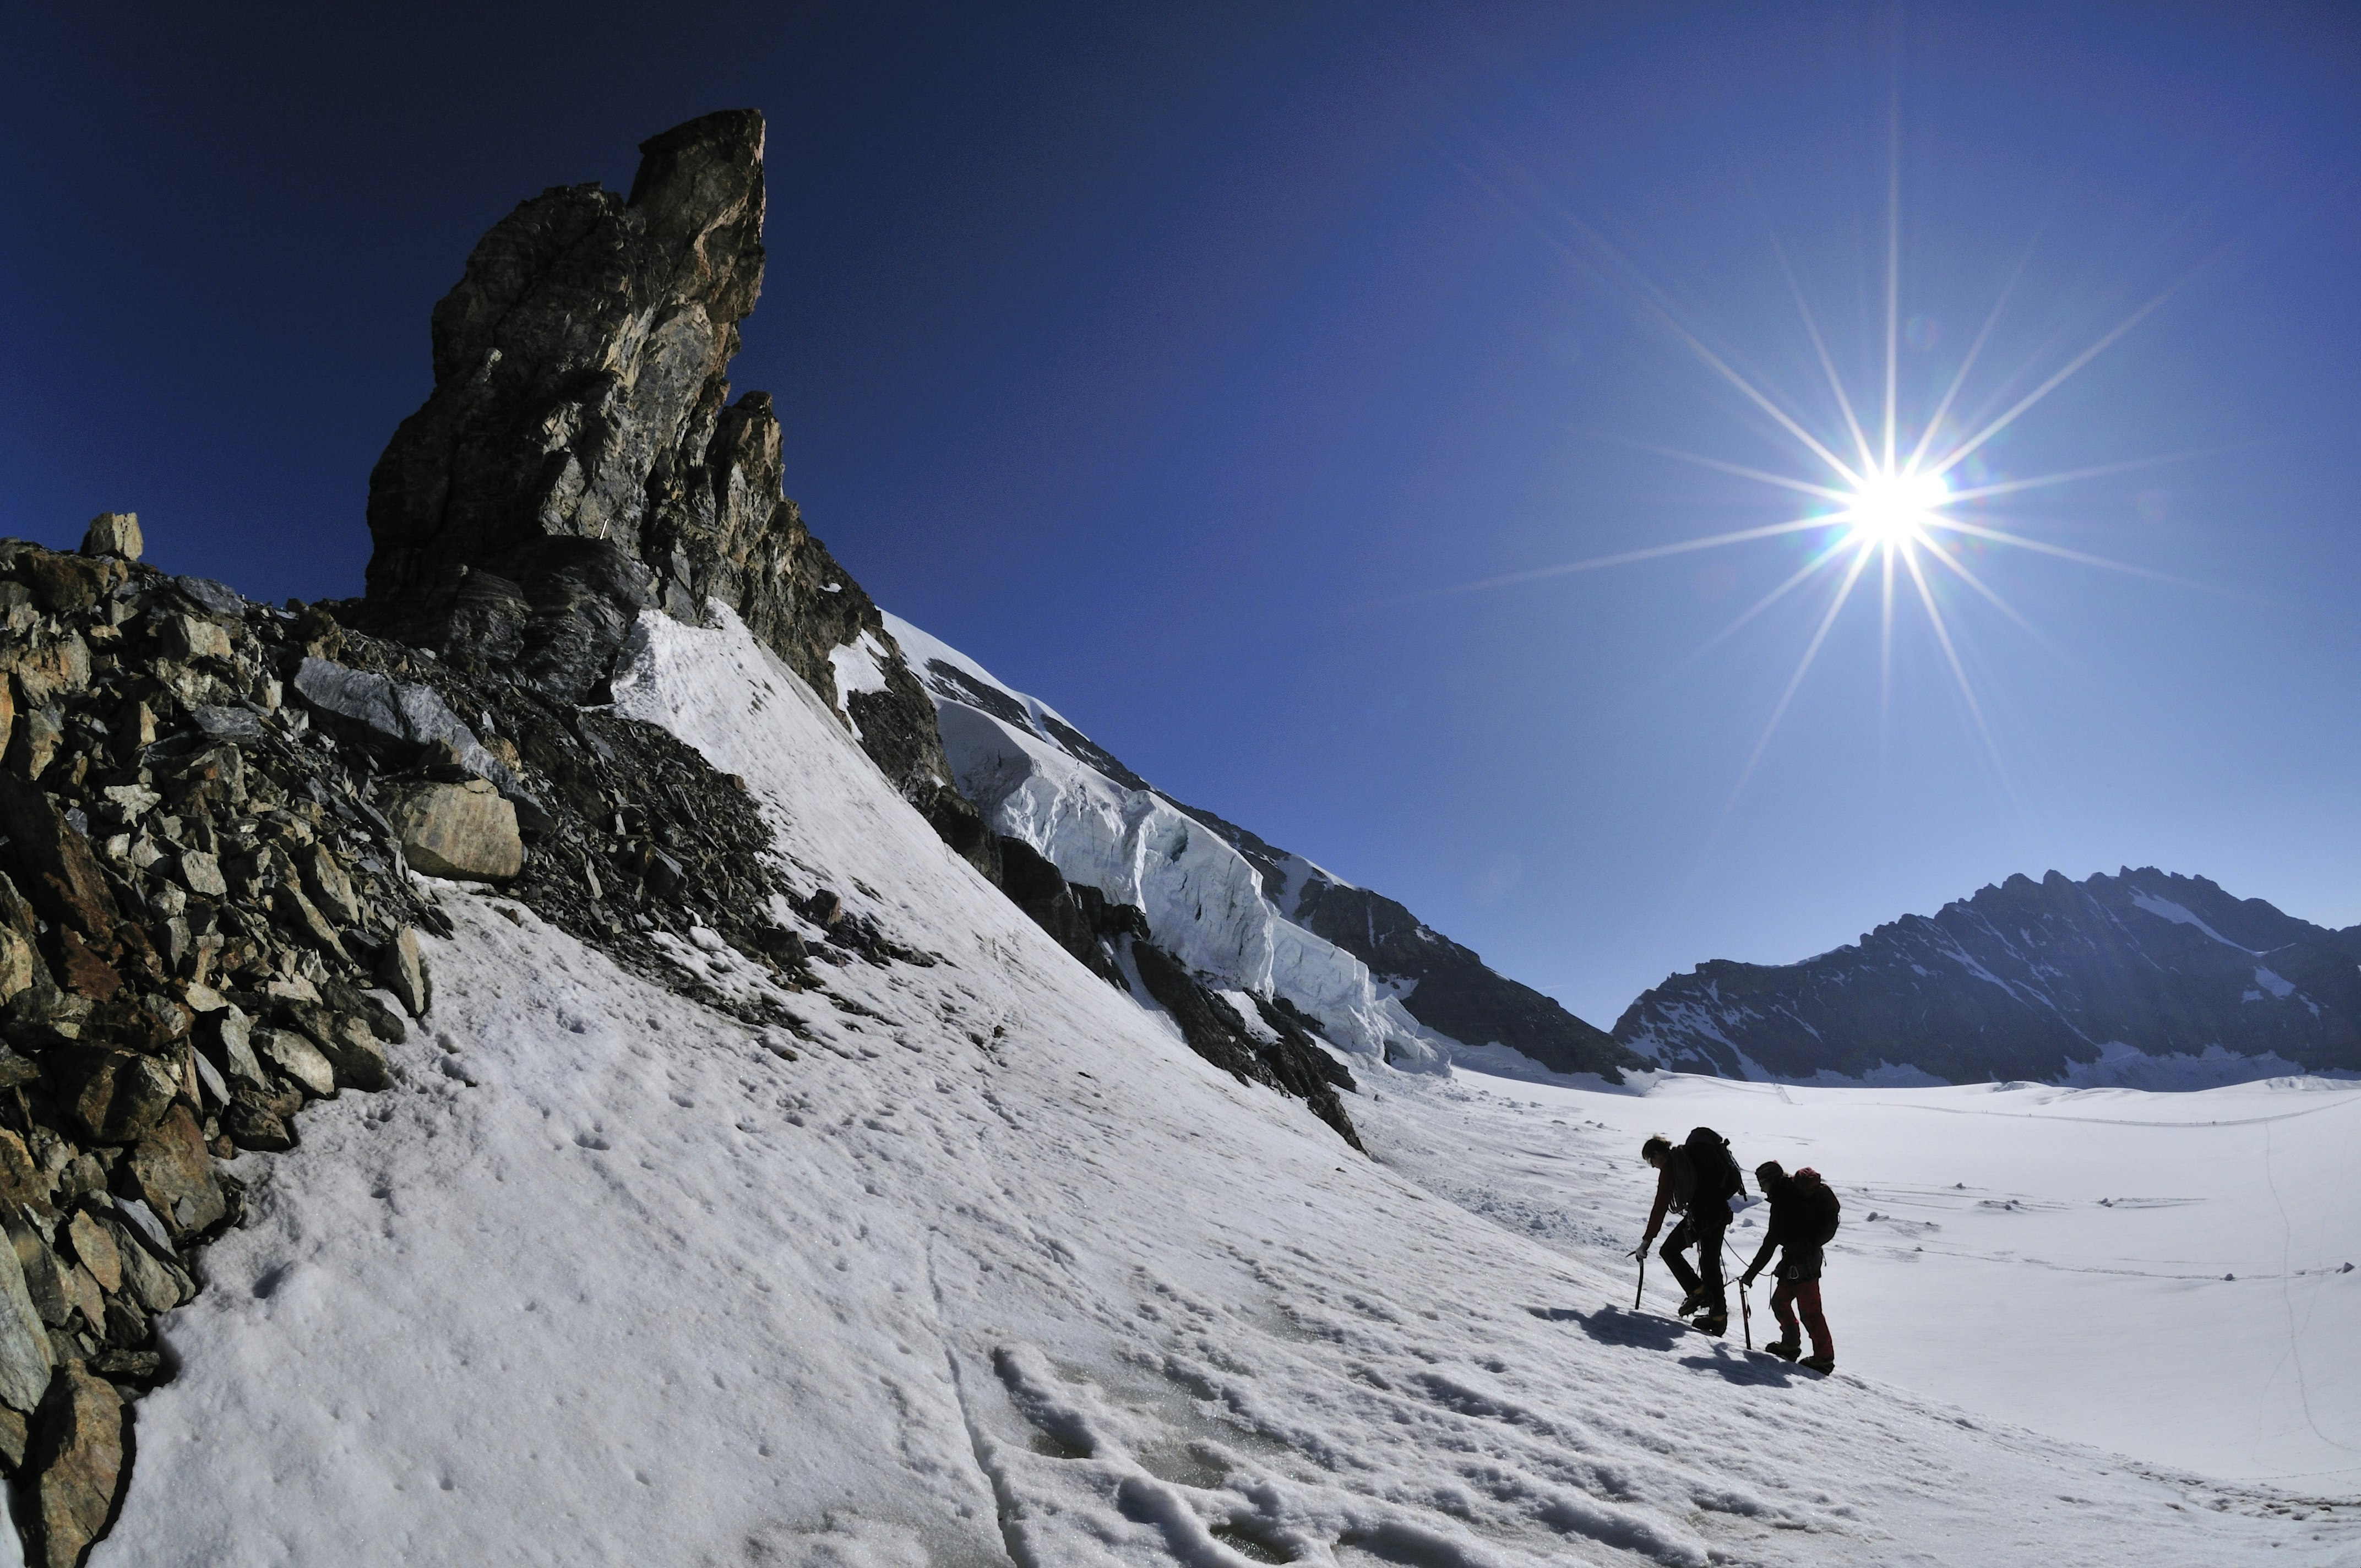 Start your mountaineering career!